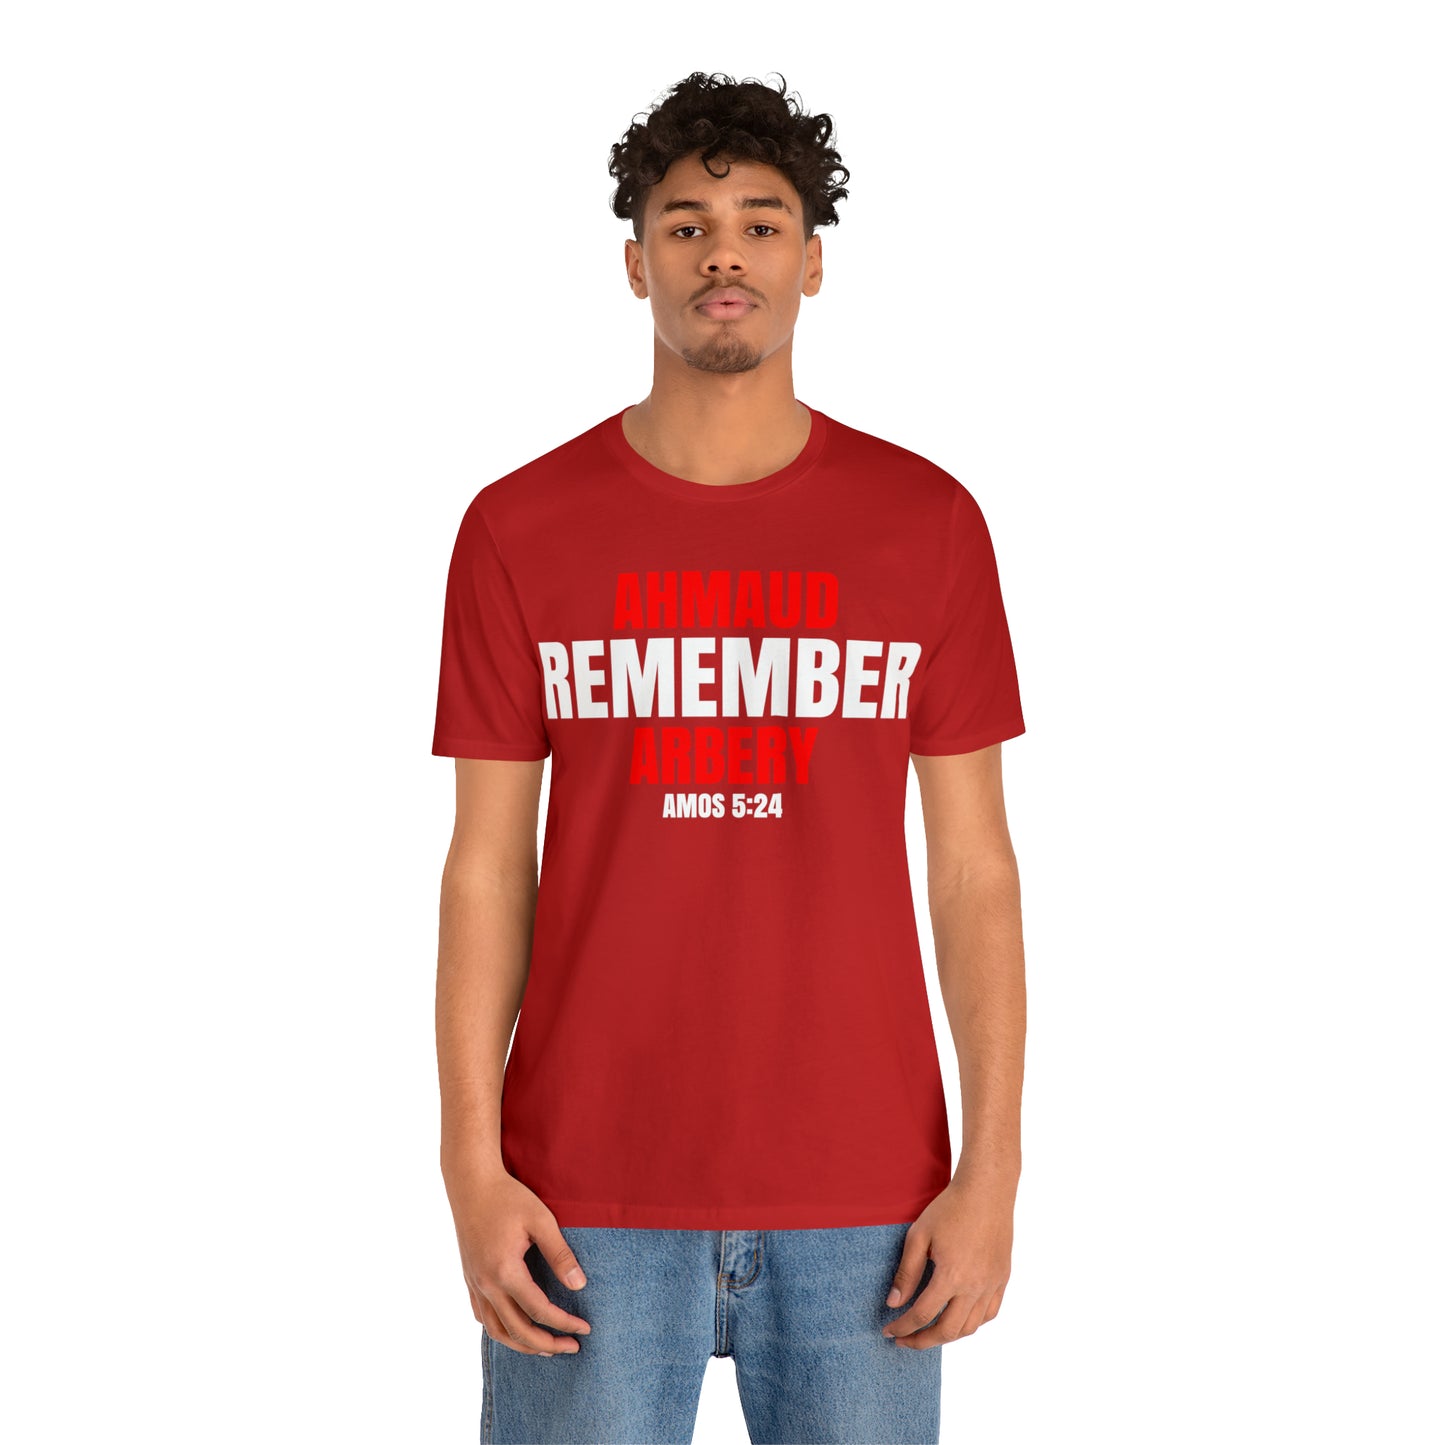 The Remember Series-Ahmaud Arbery-Unisex Jersey Short Sleeve Tee